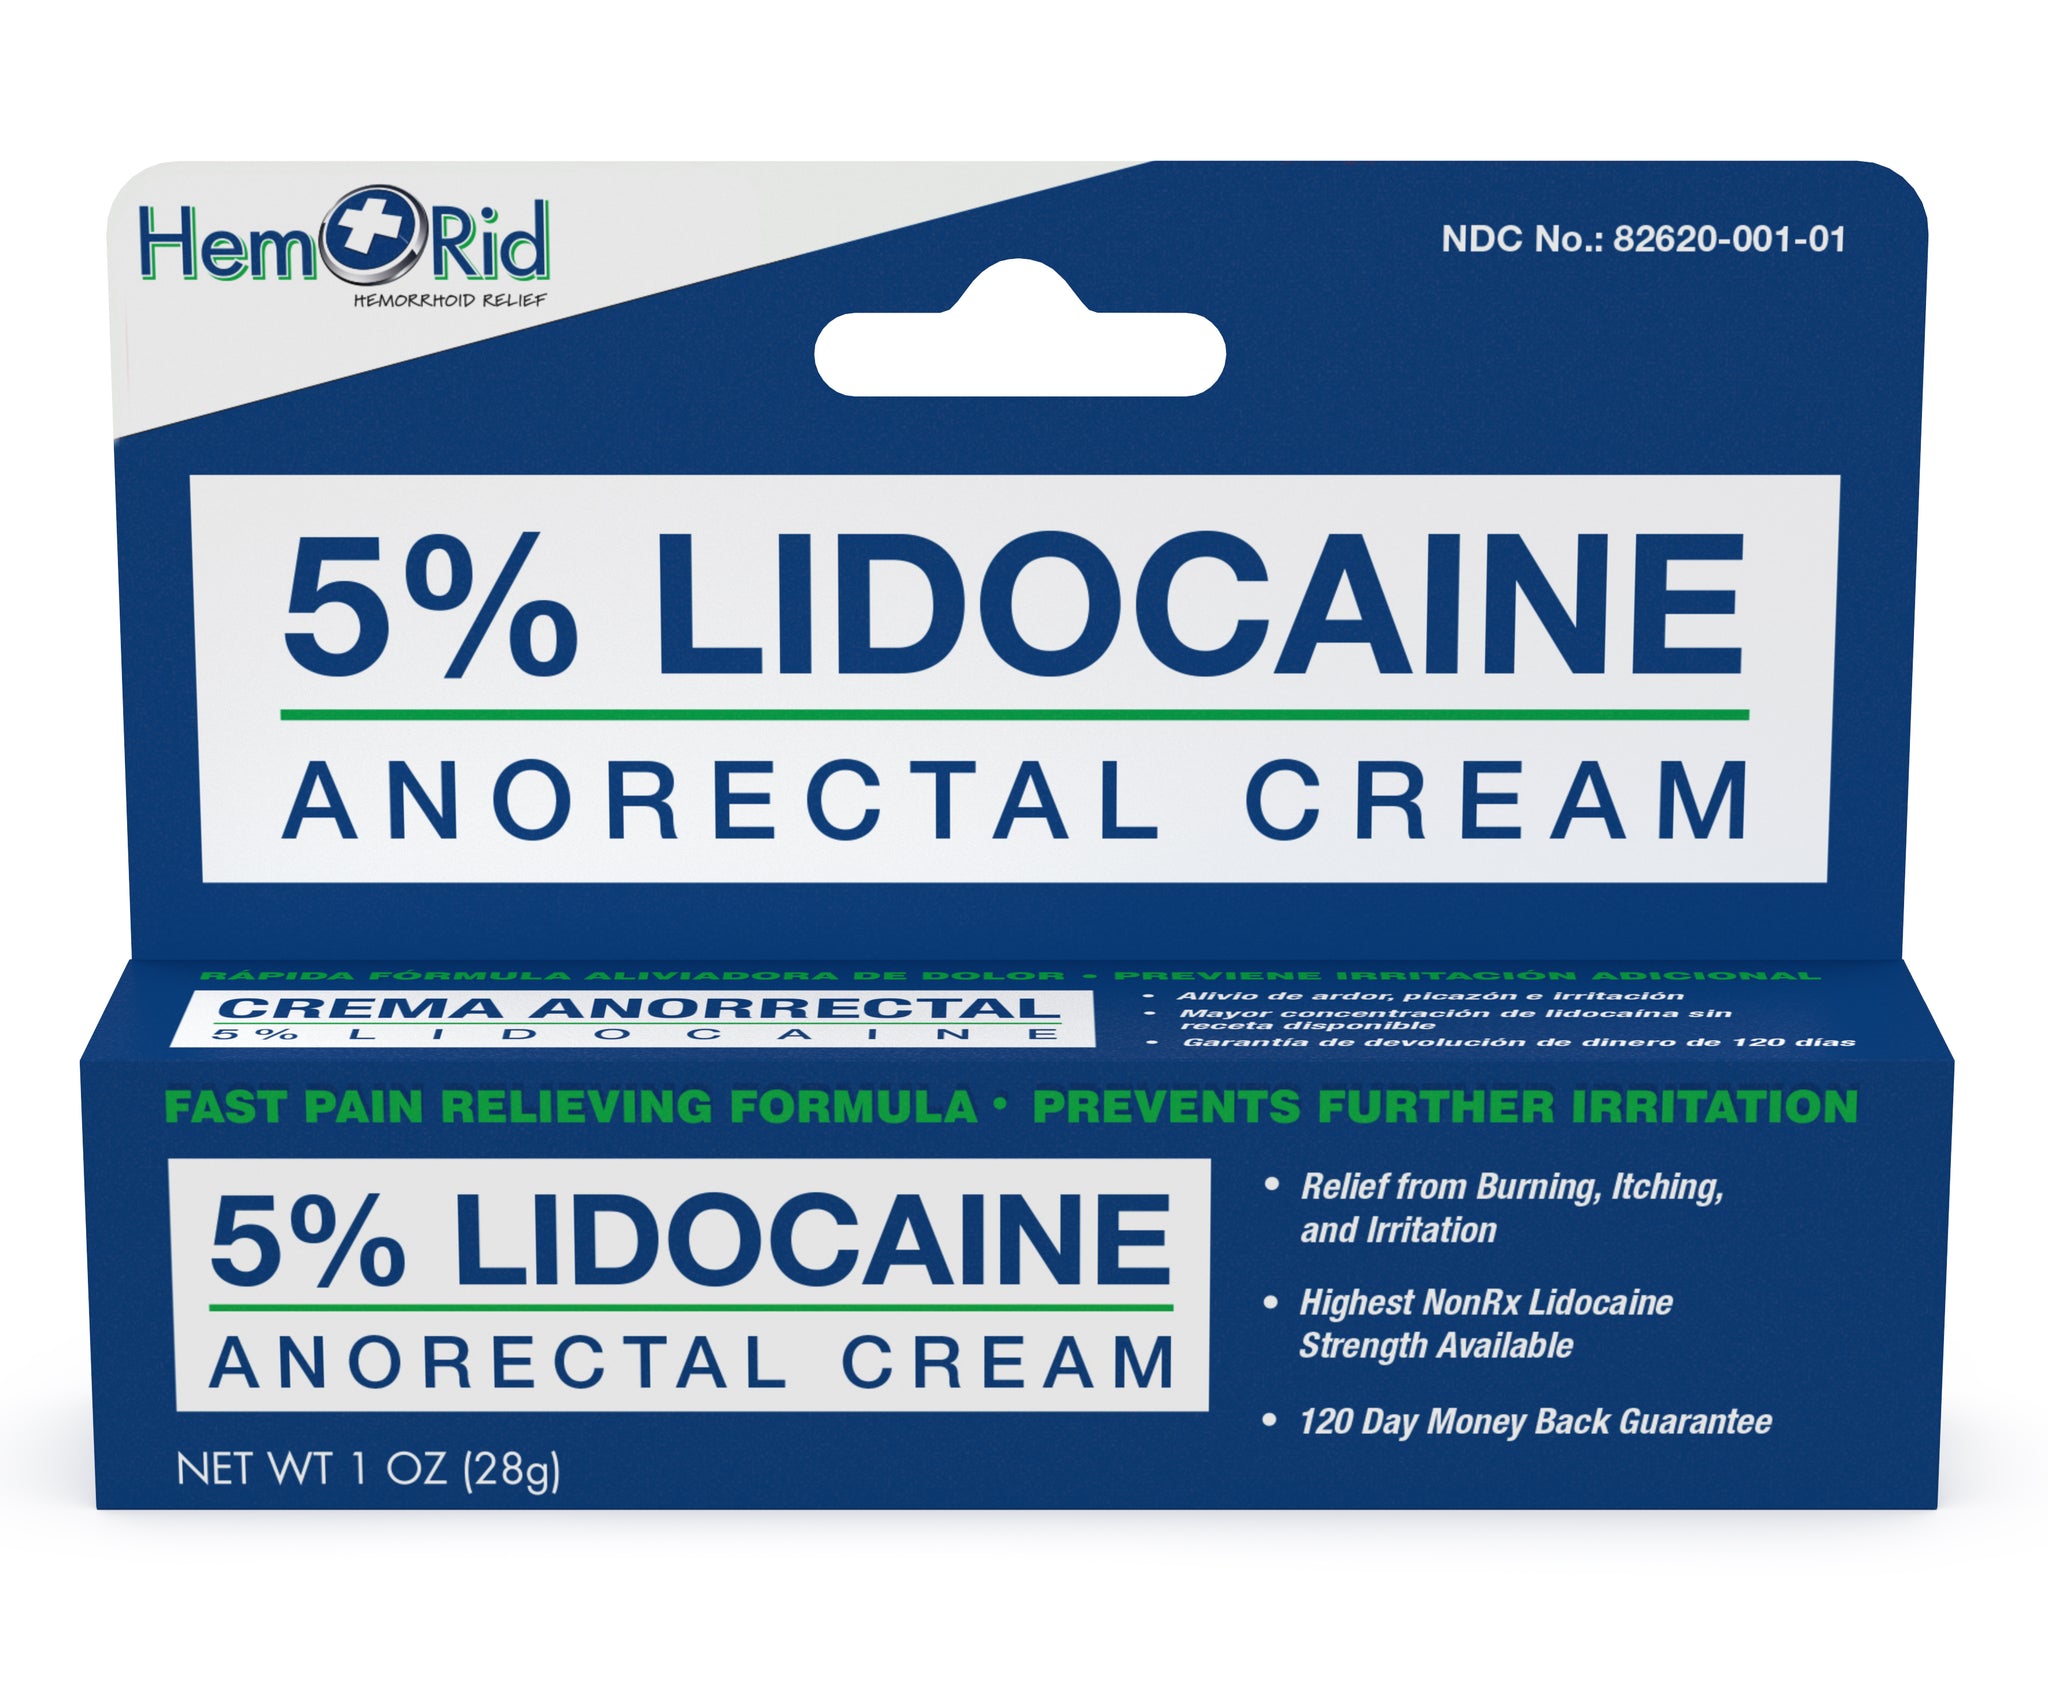 Hemorrhoid Cream With Lidocaine 5 Hemrid 3004